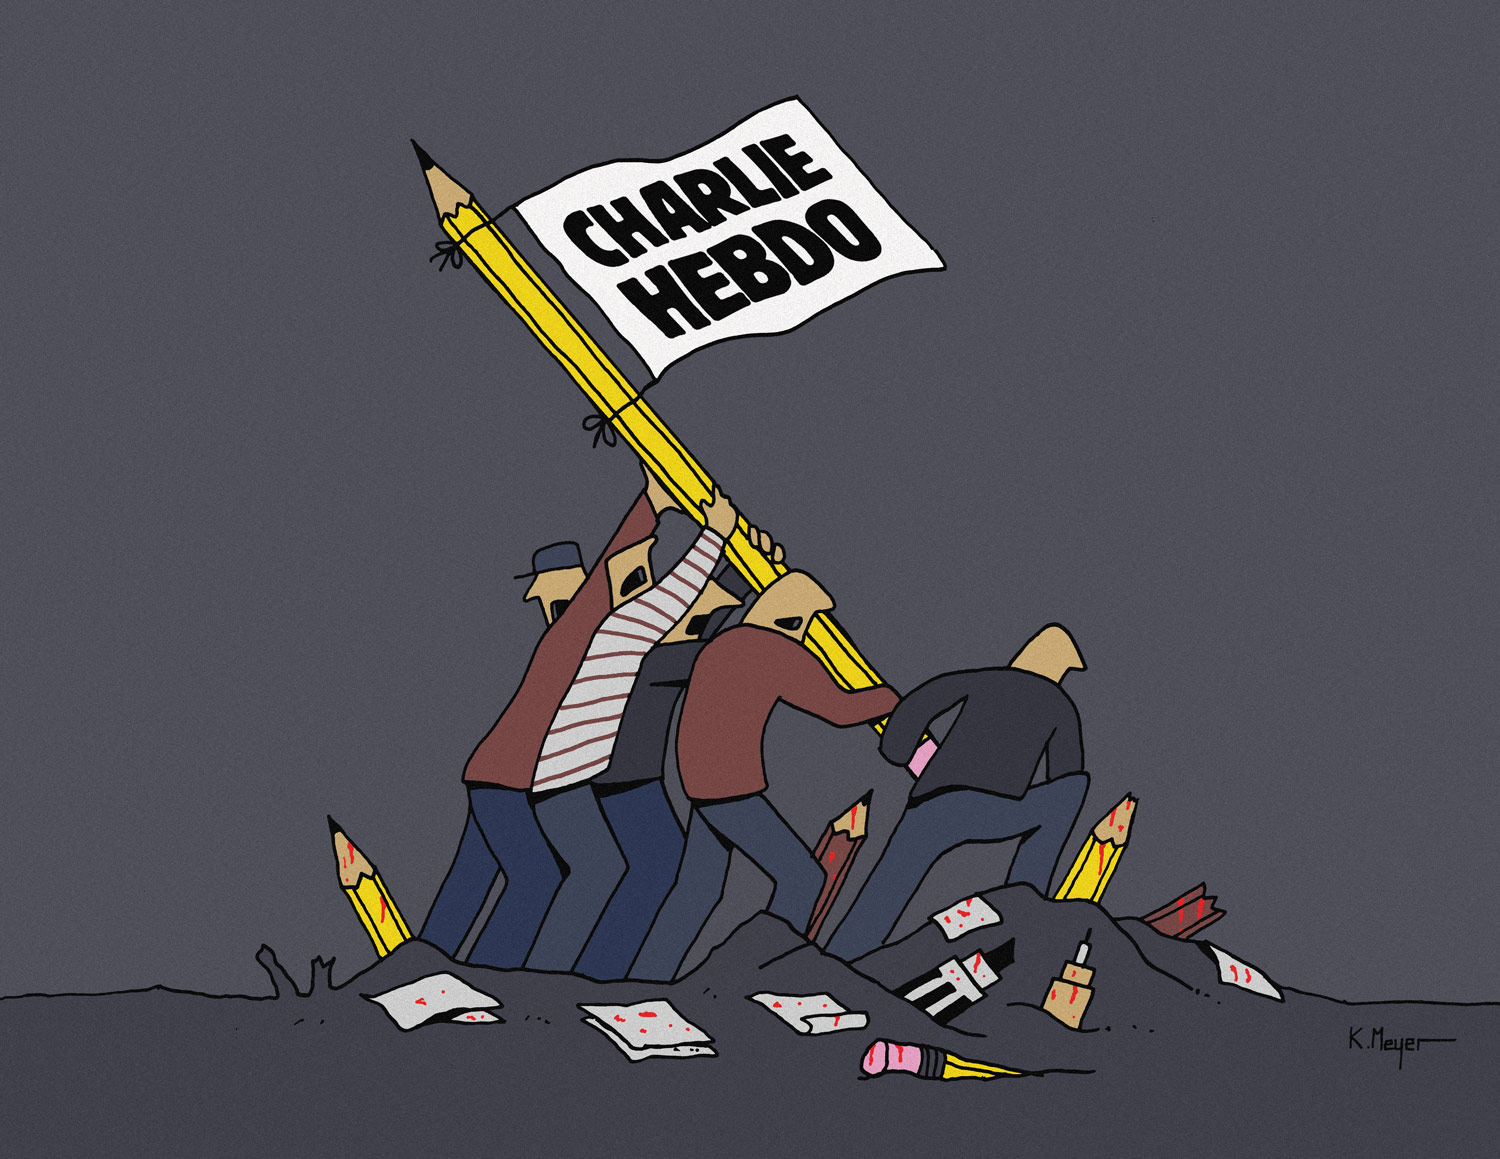 Cherlie Hebdo: Personal artwork